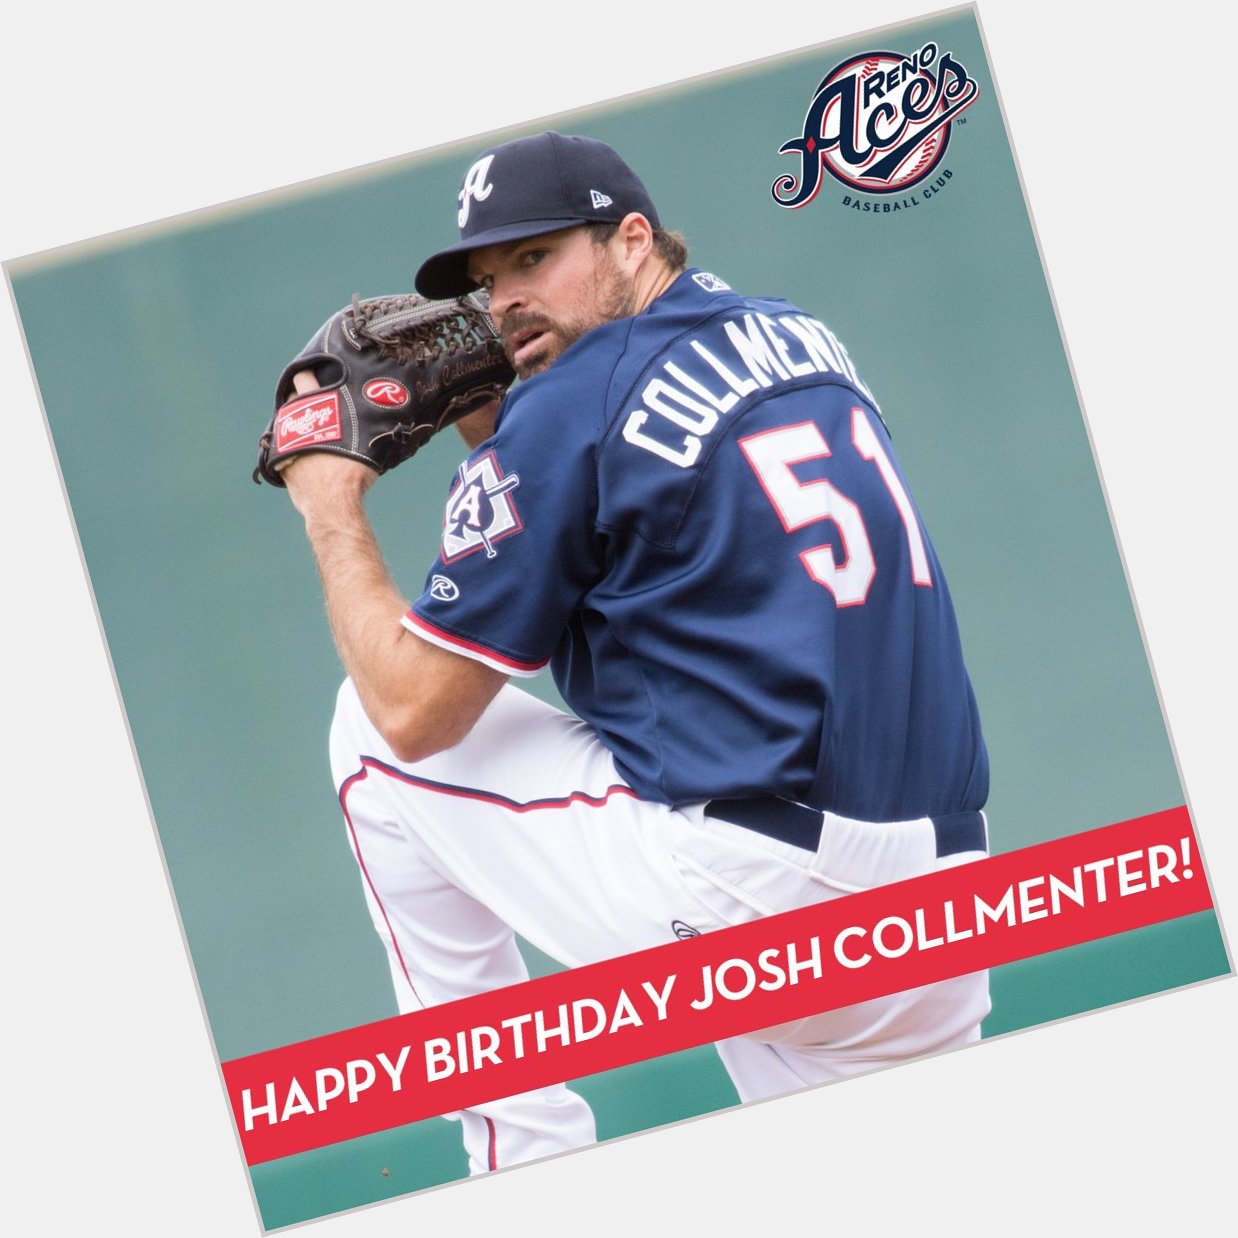 Happy Birthday to former hurler, Josh Collmenter! 